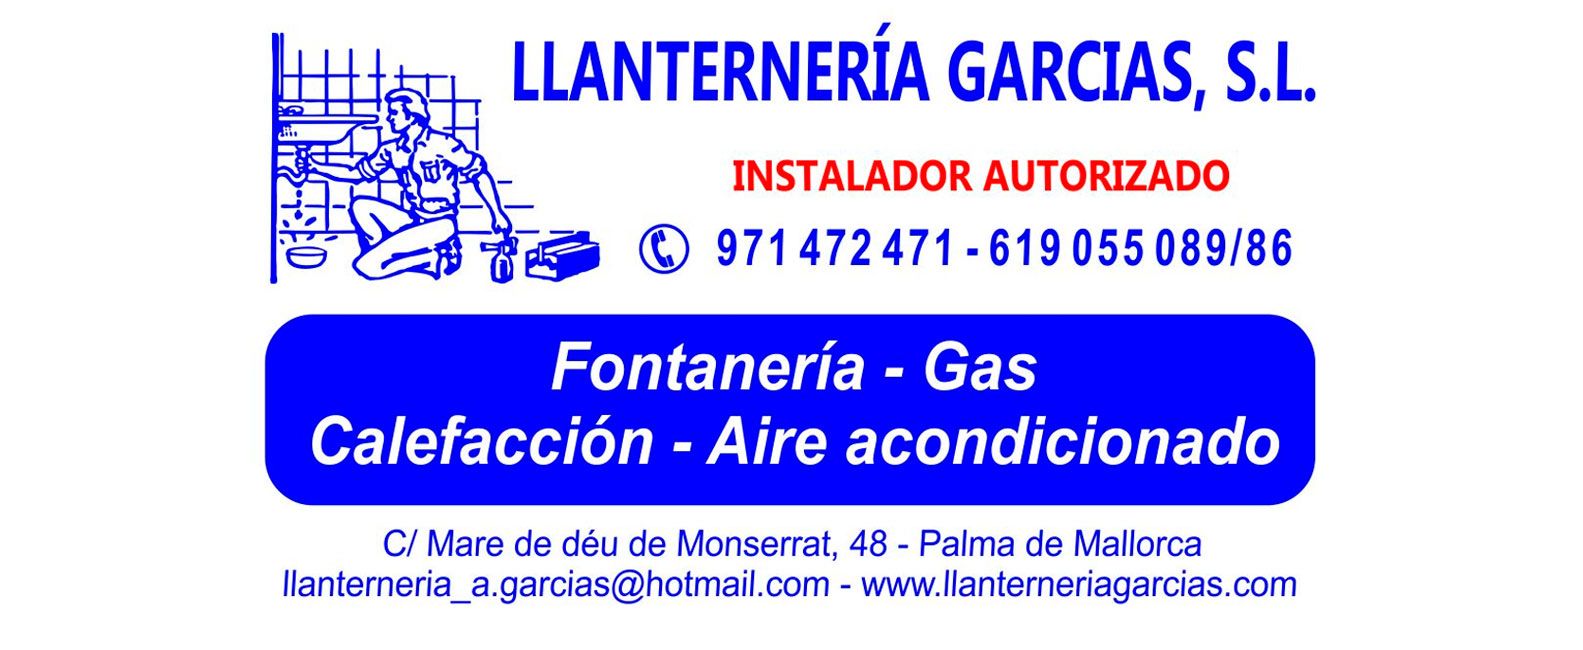 llanterneria-garcas-banner1